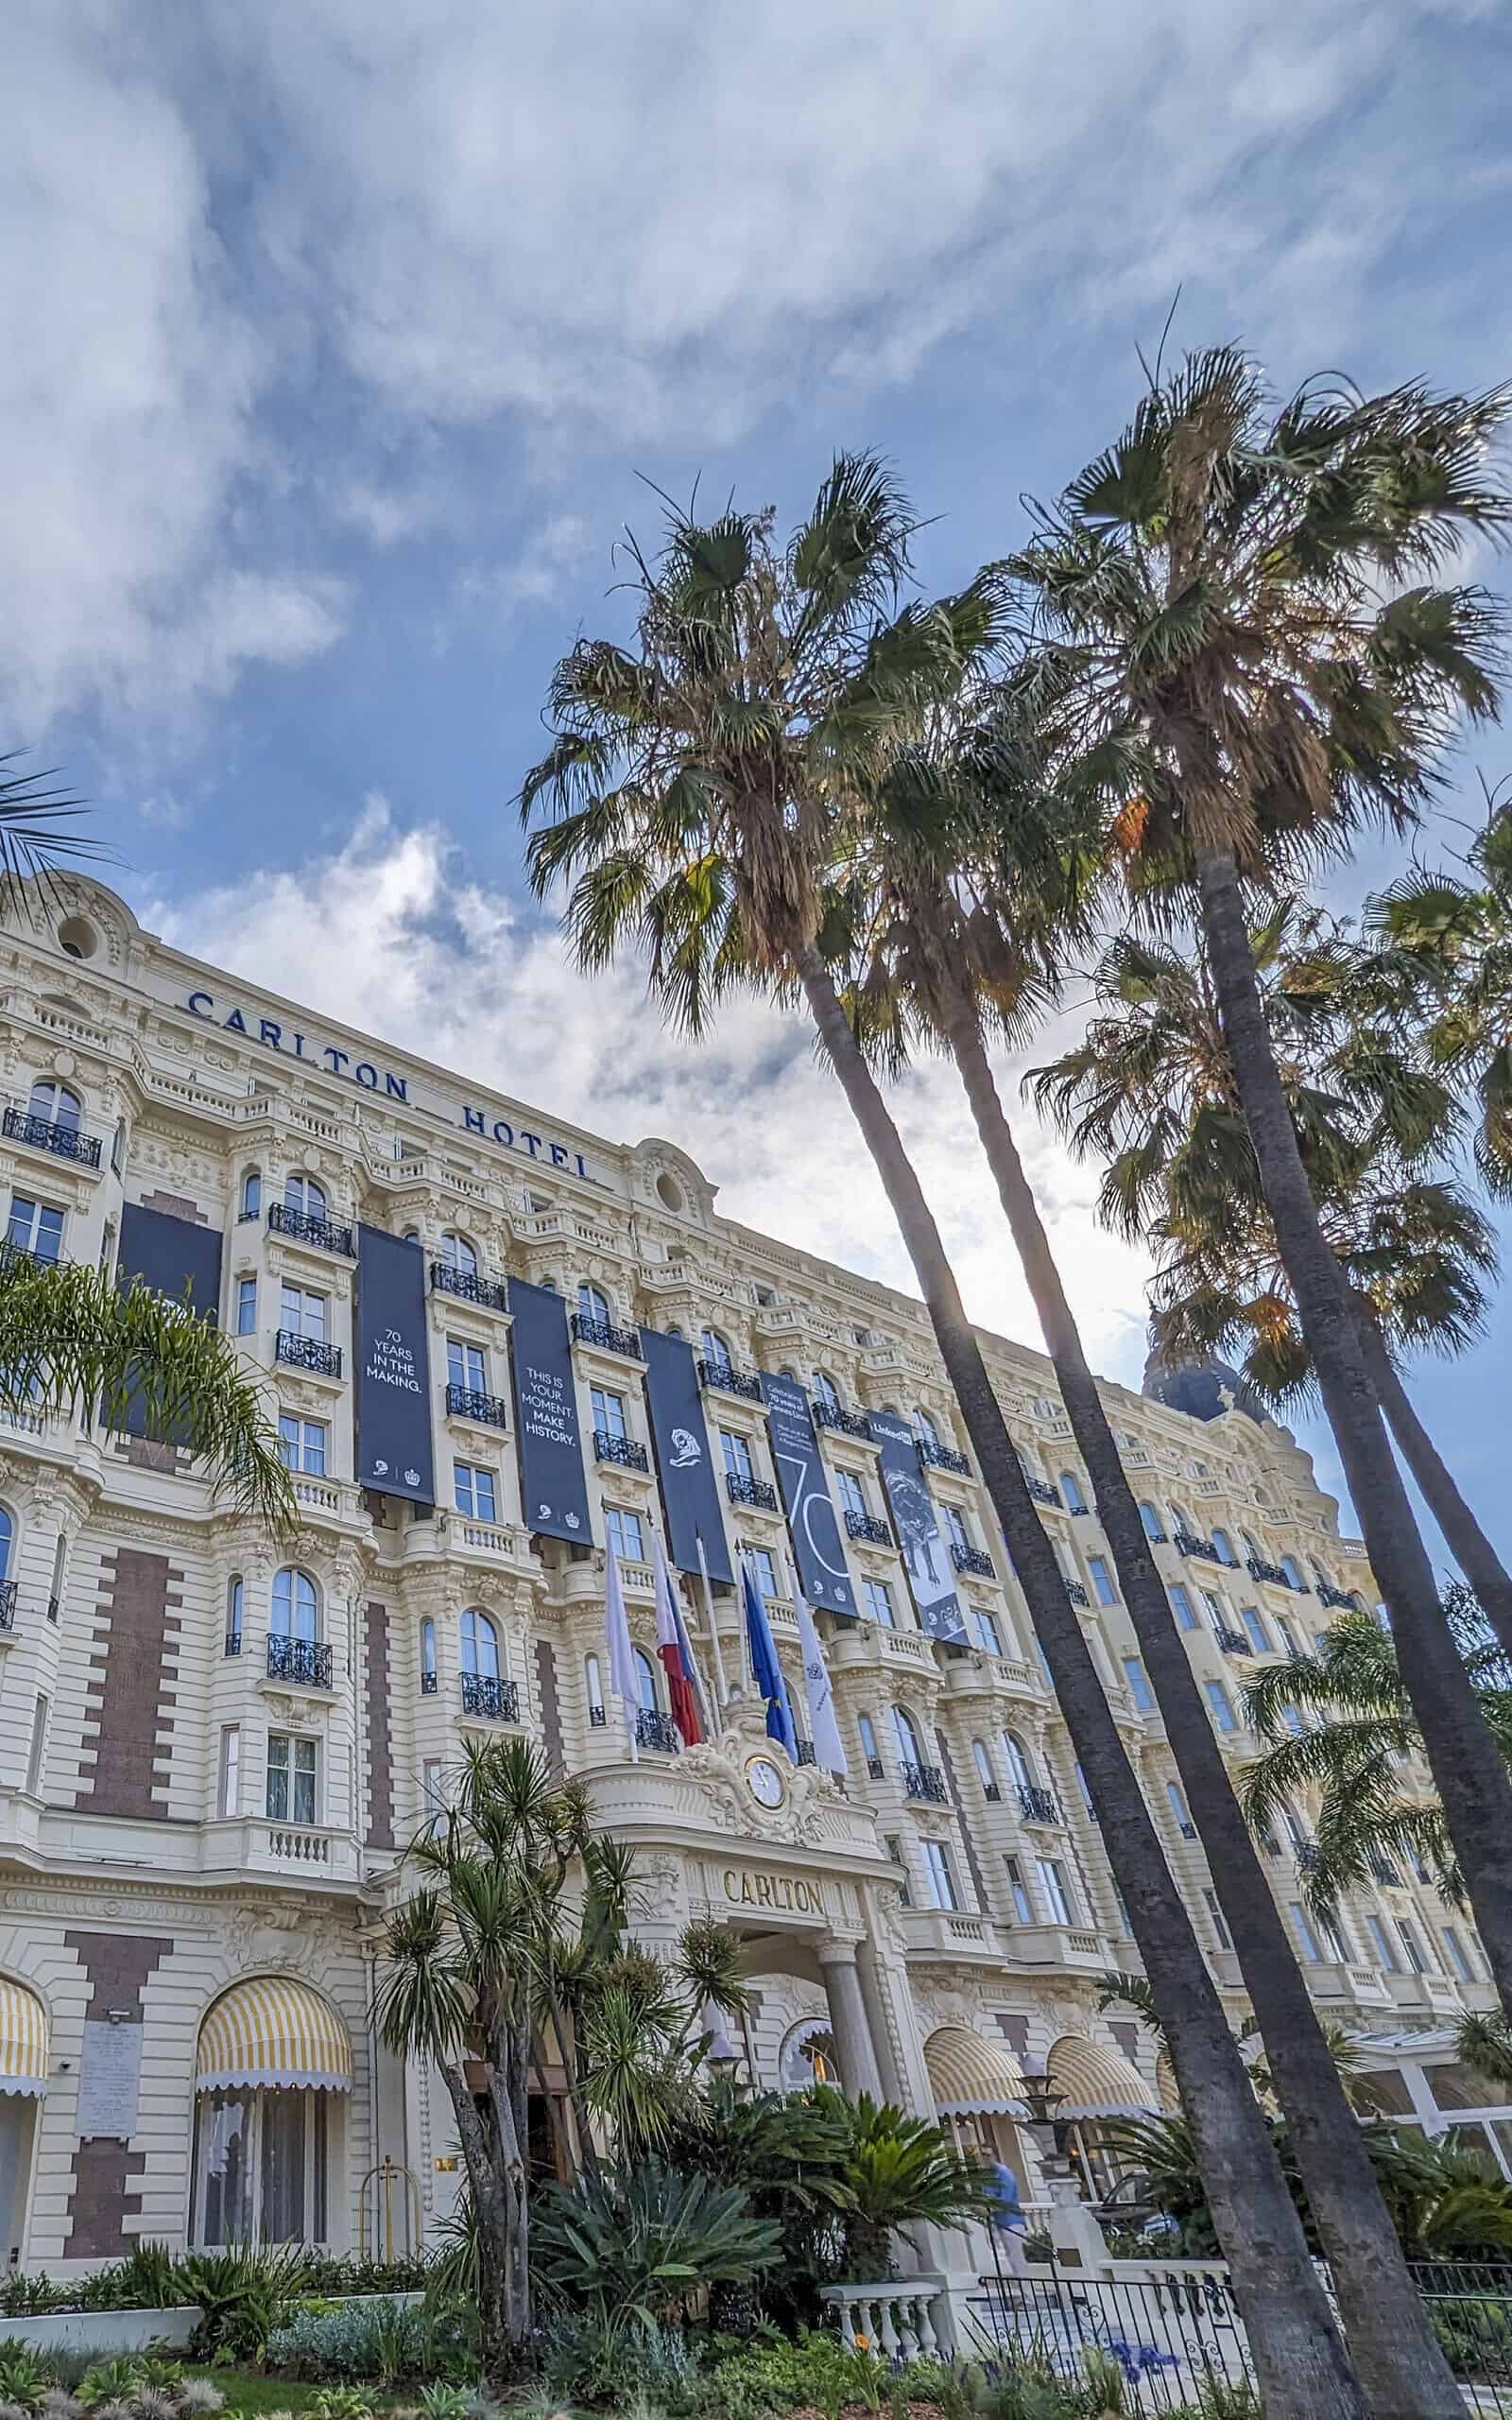 The Carlton Hotel, TikTok's home in Cannes